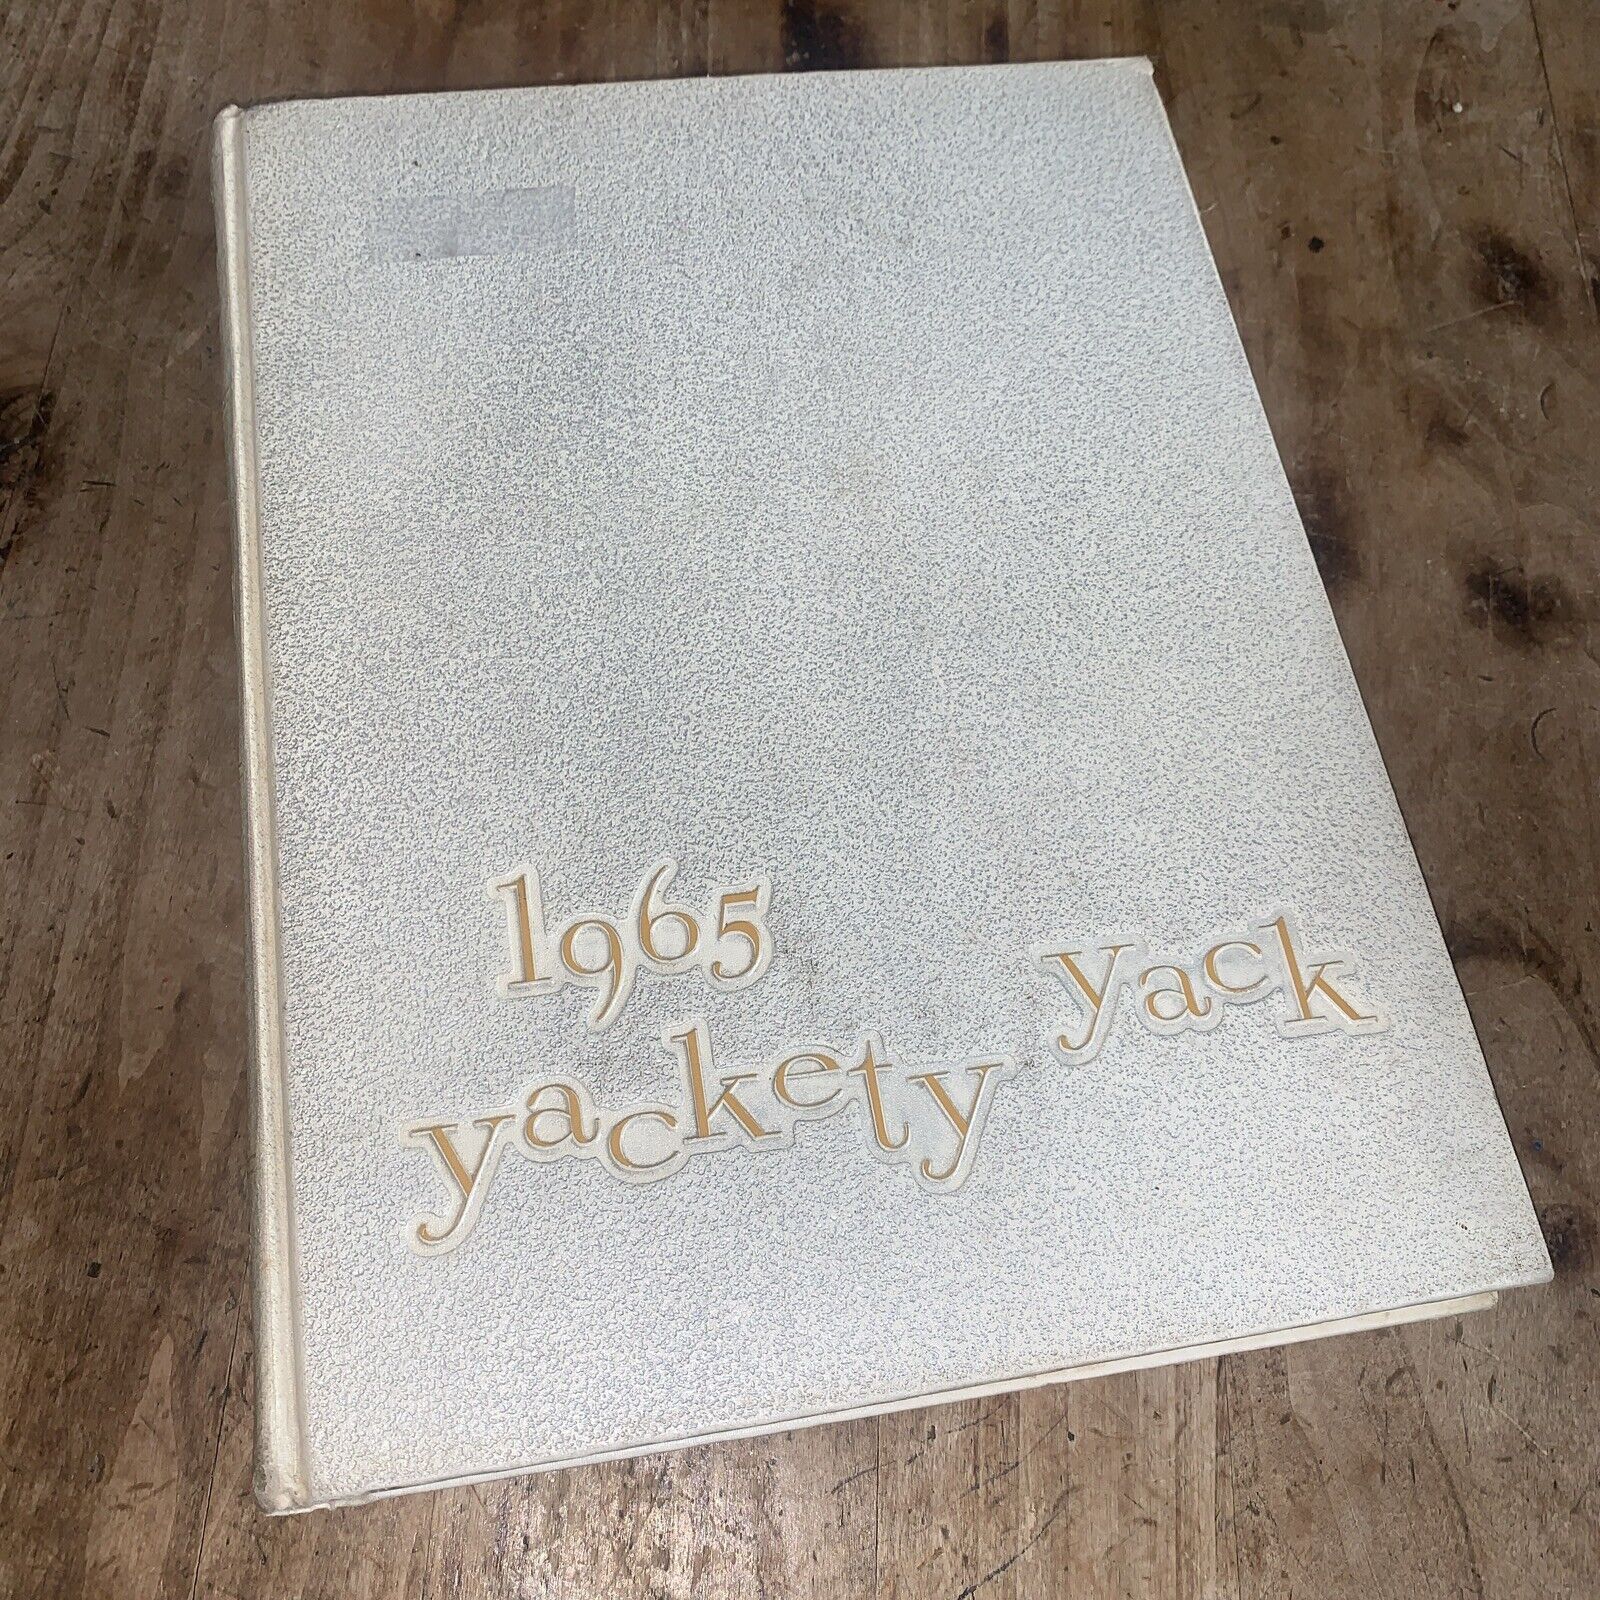 1965 UNIVERSITY OF NORTH CAROLINA YEARBOOK, THE YACKETY YACK, CHAPEL HILL, NC